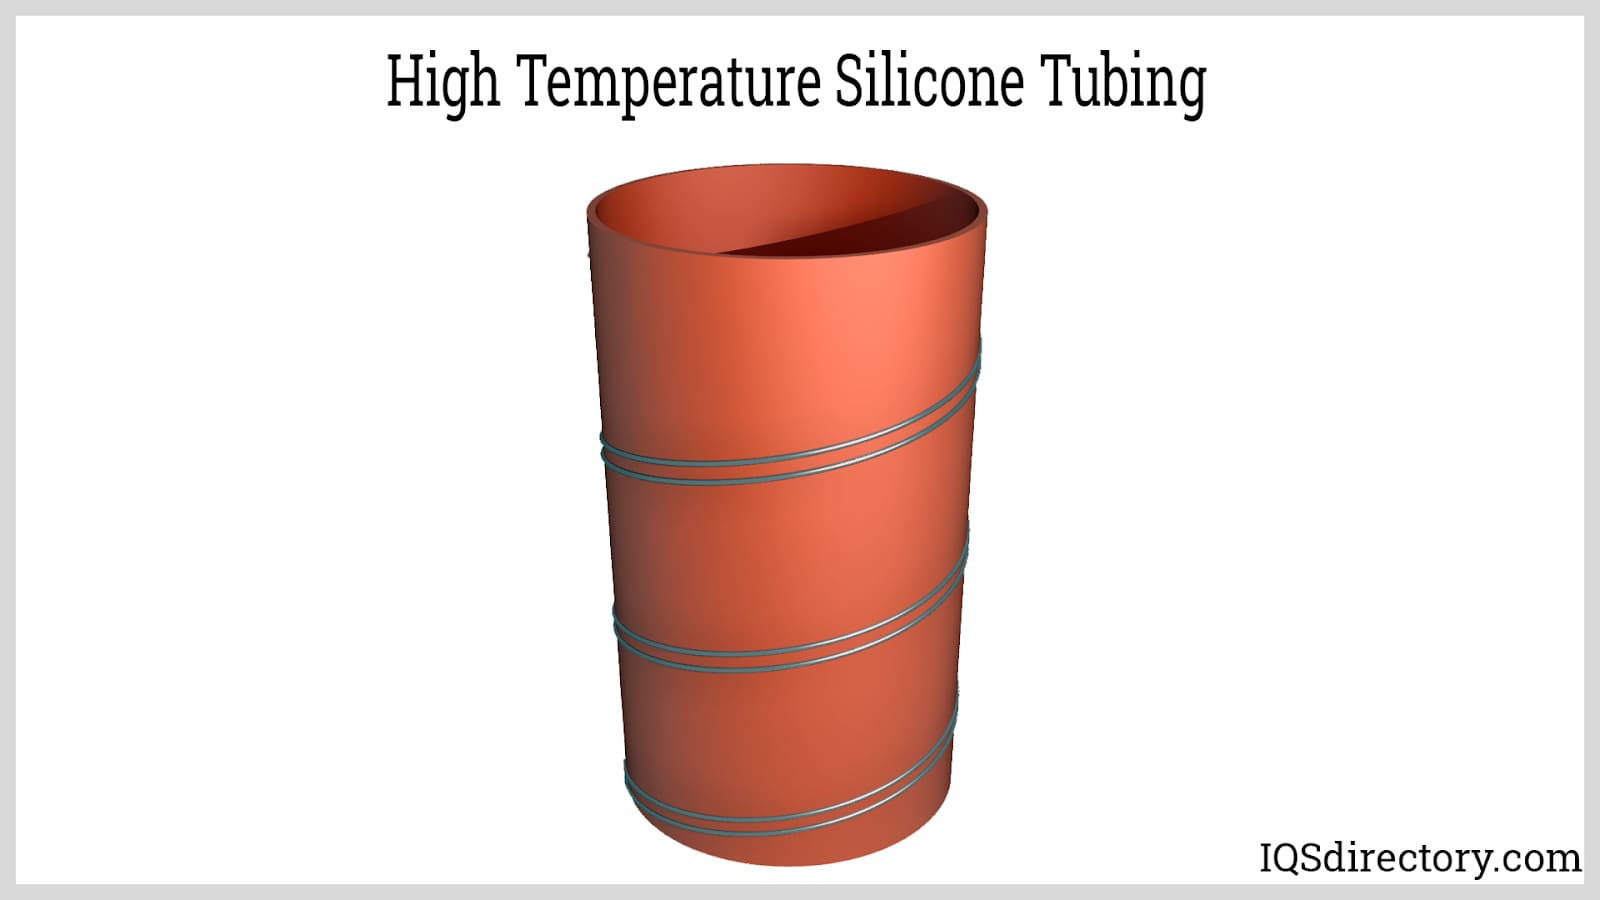 High Temperature Silicone Tubing